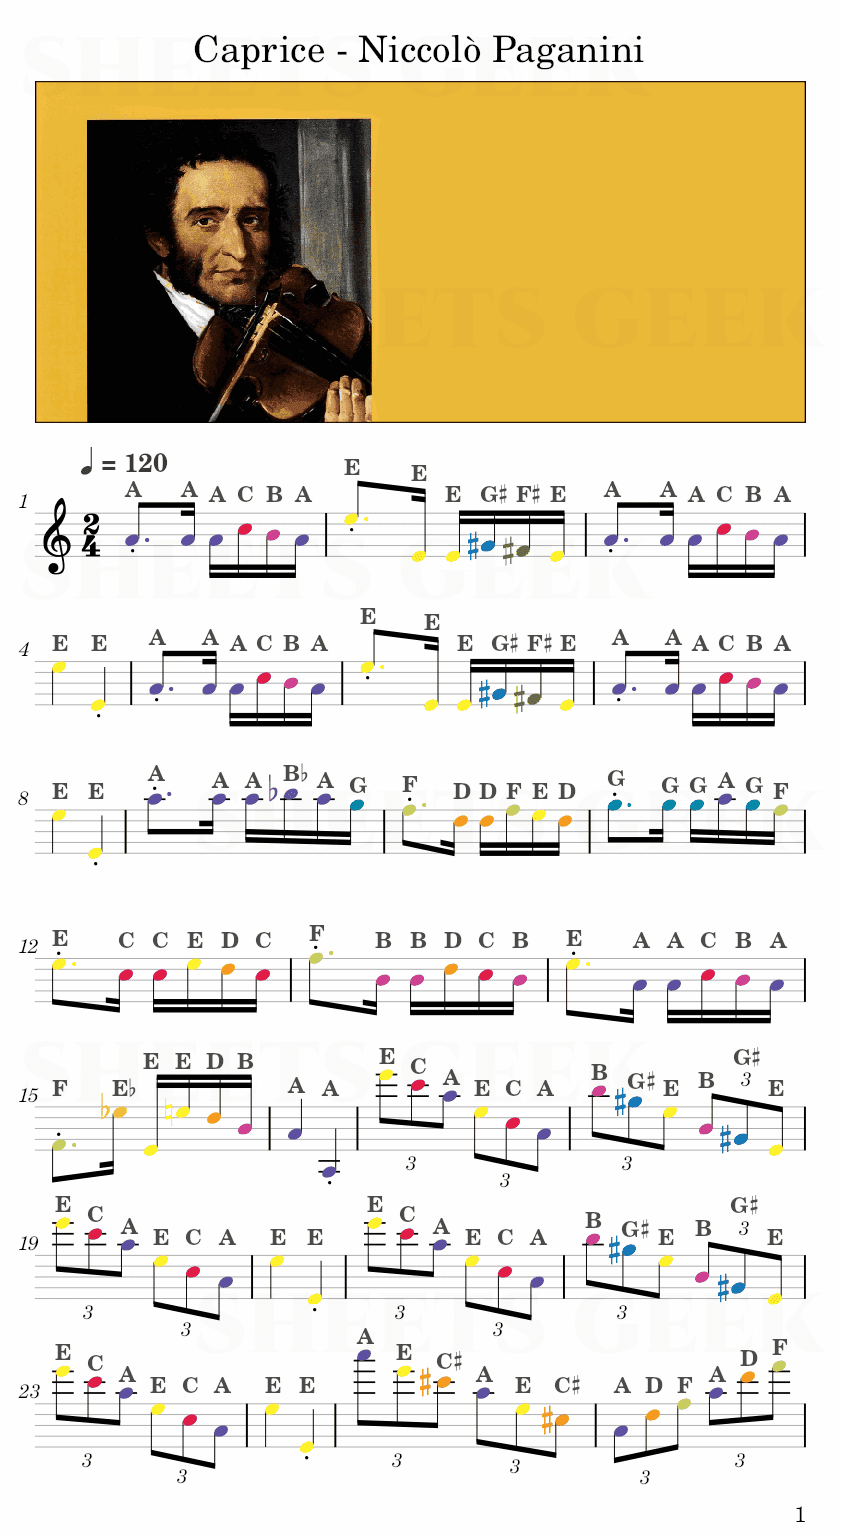 Caprice - Niccolo Paganini Easy Sheet Music Free for piano, keyboard, flute, violin, sax, cello page 1